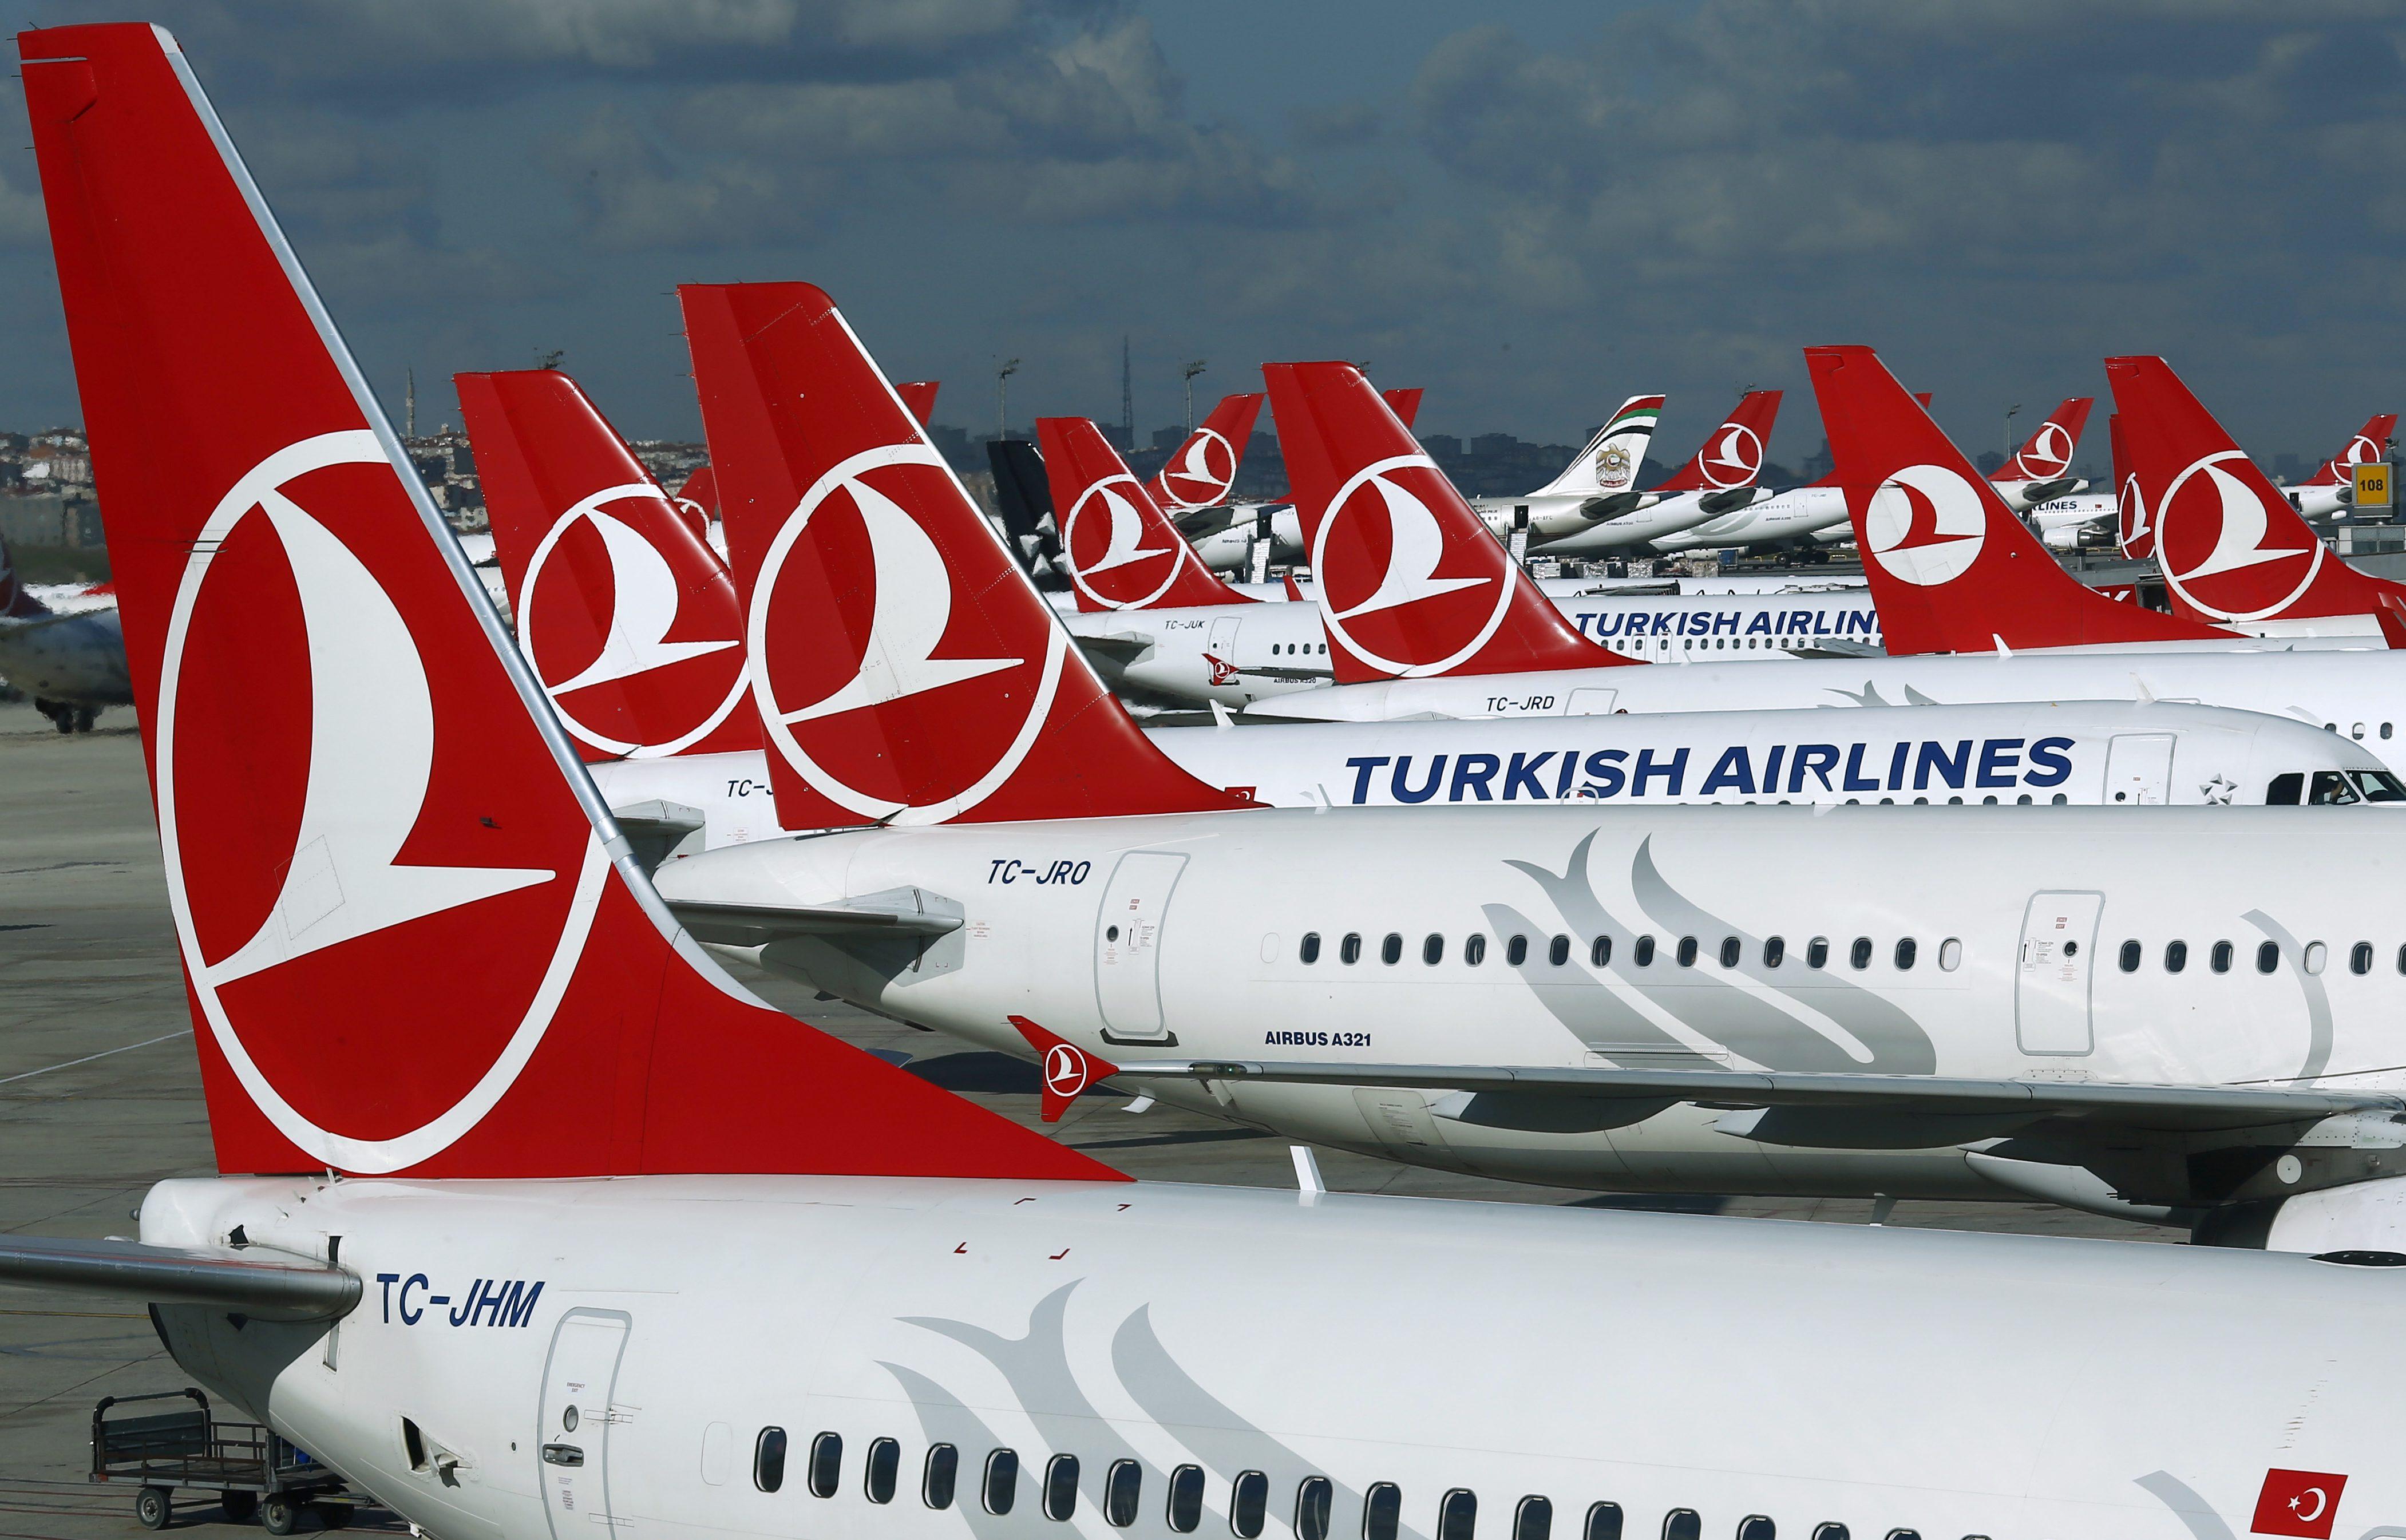 TURKISH AIRLINES: Переезд в новый аэропорт Стамбула 06 апреля 2019!